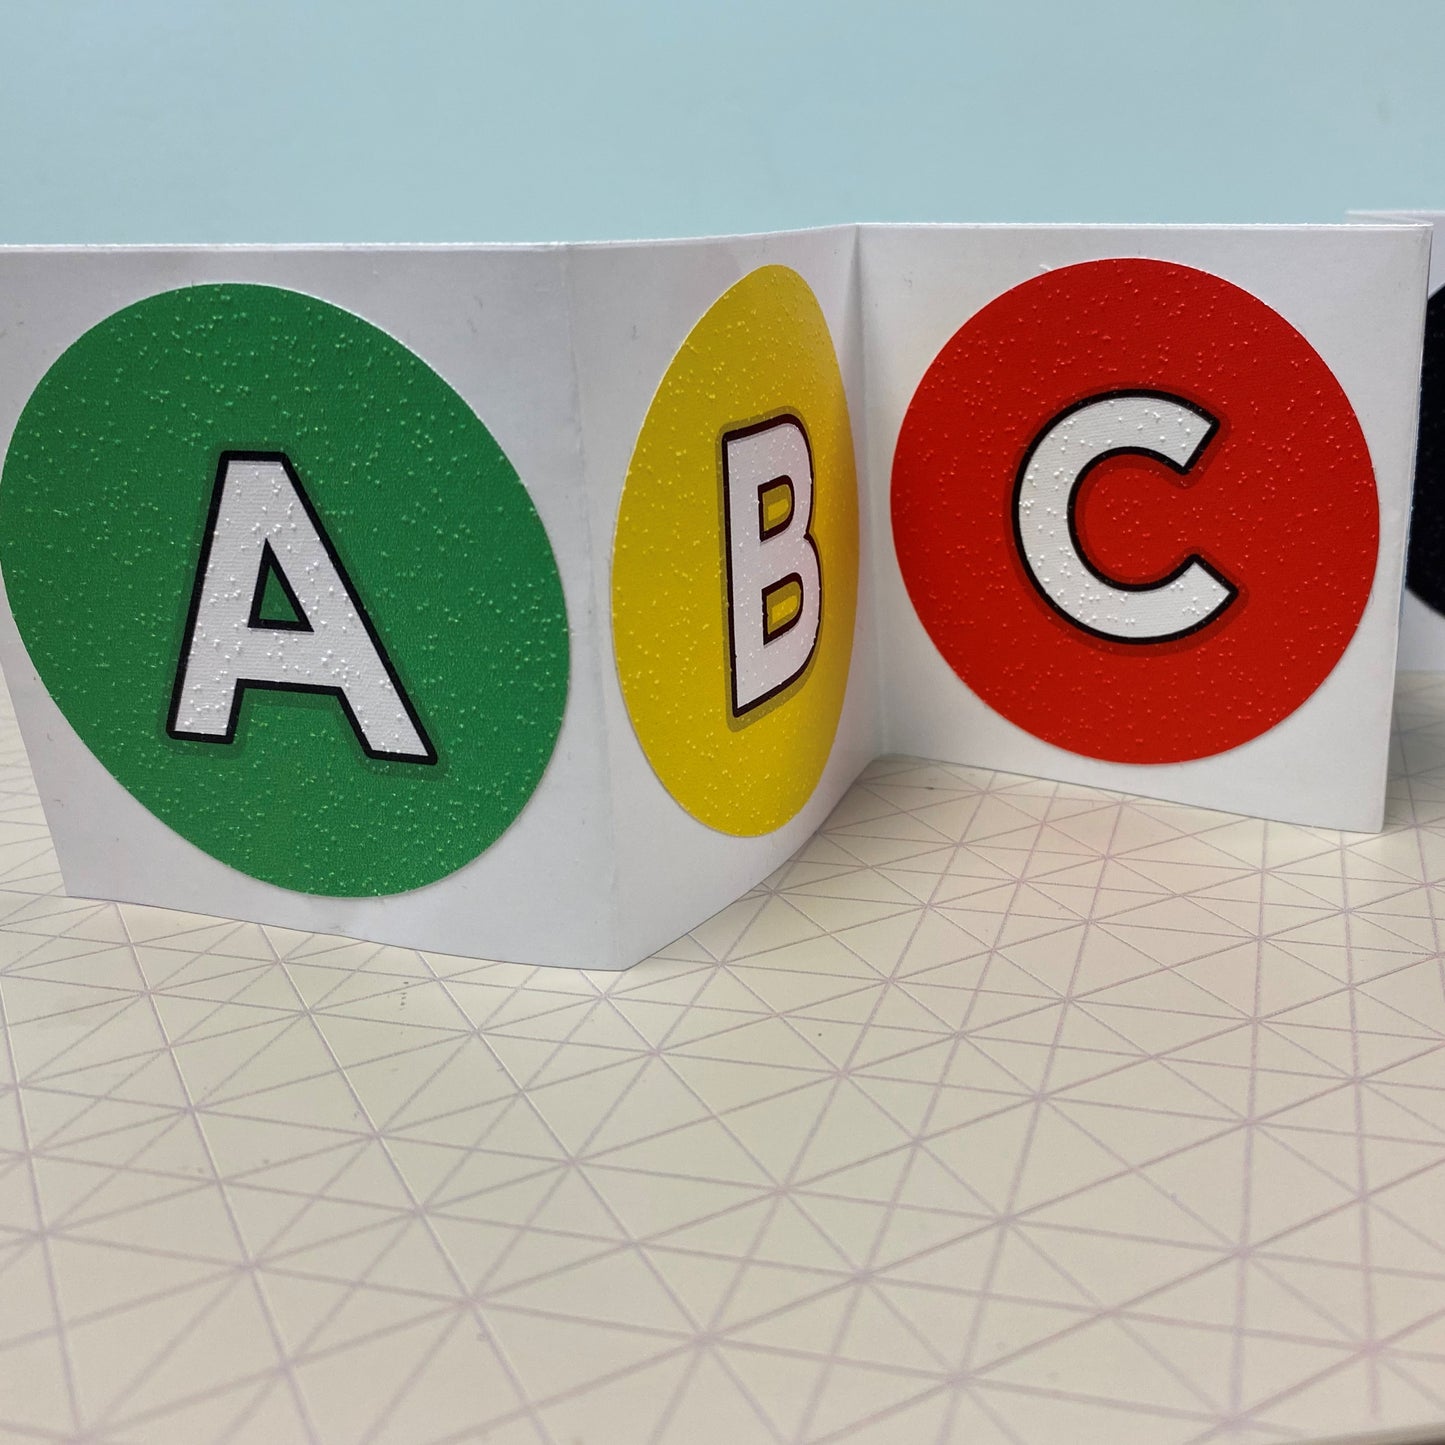 Alphabet - A to Z (and more!)